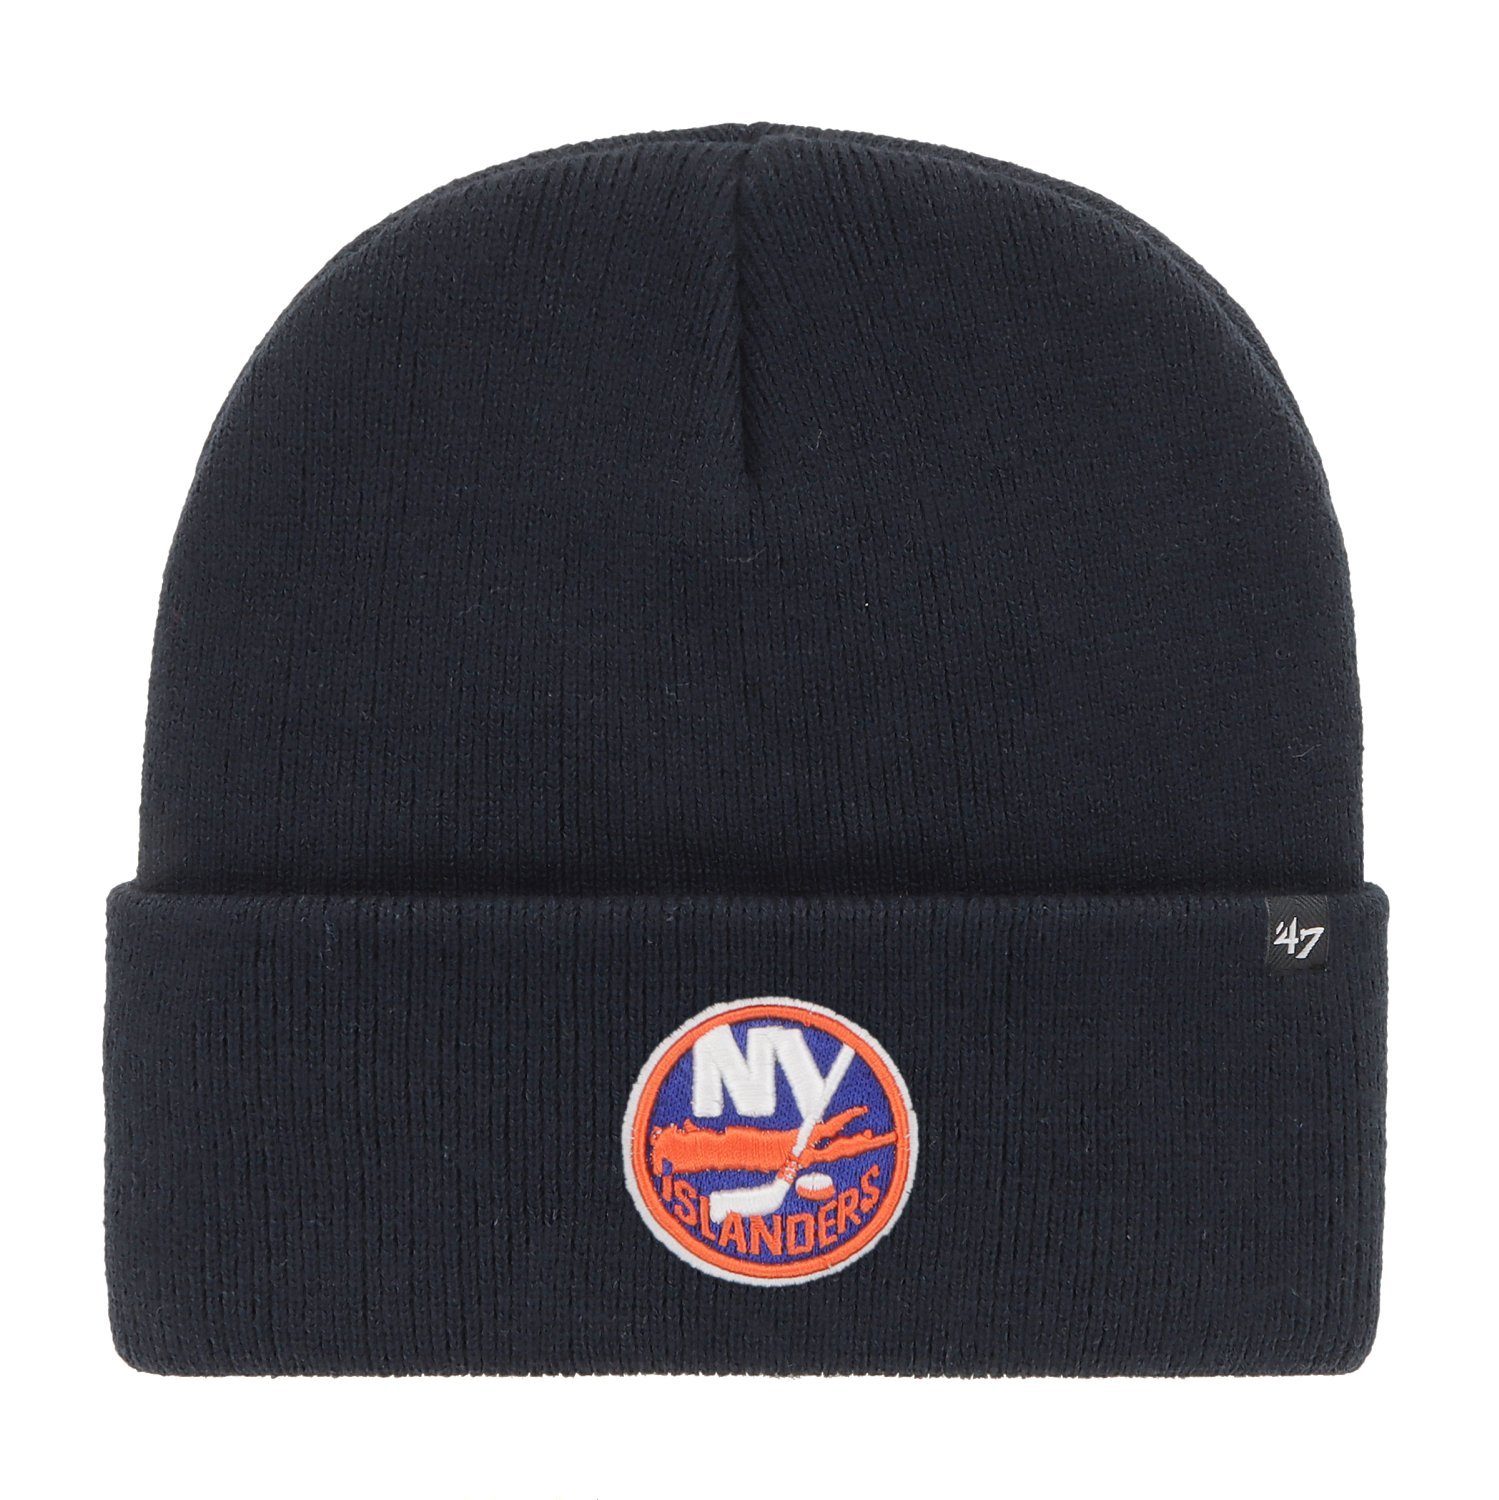 '47 Brand Fleecemütze Beanie HAYMAKER New York Islanders | Fleecemützen